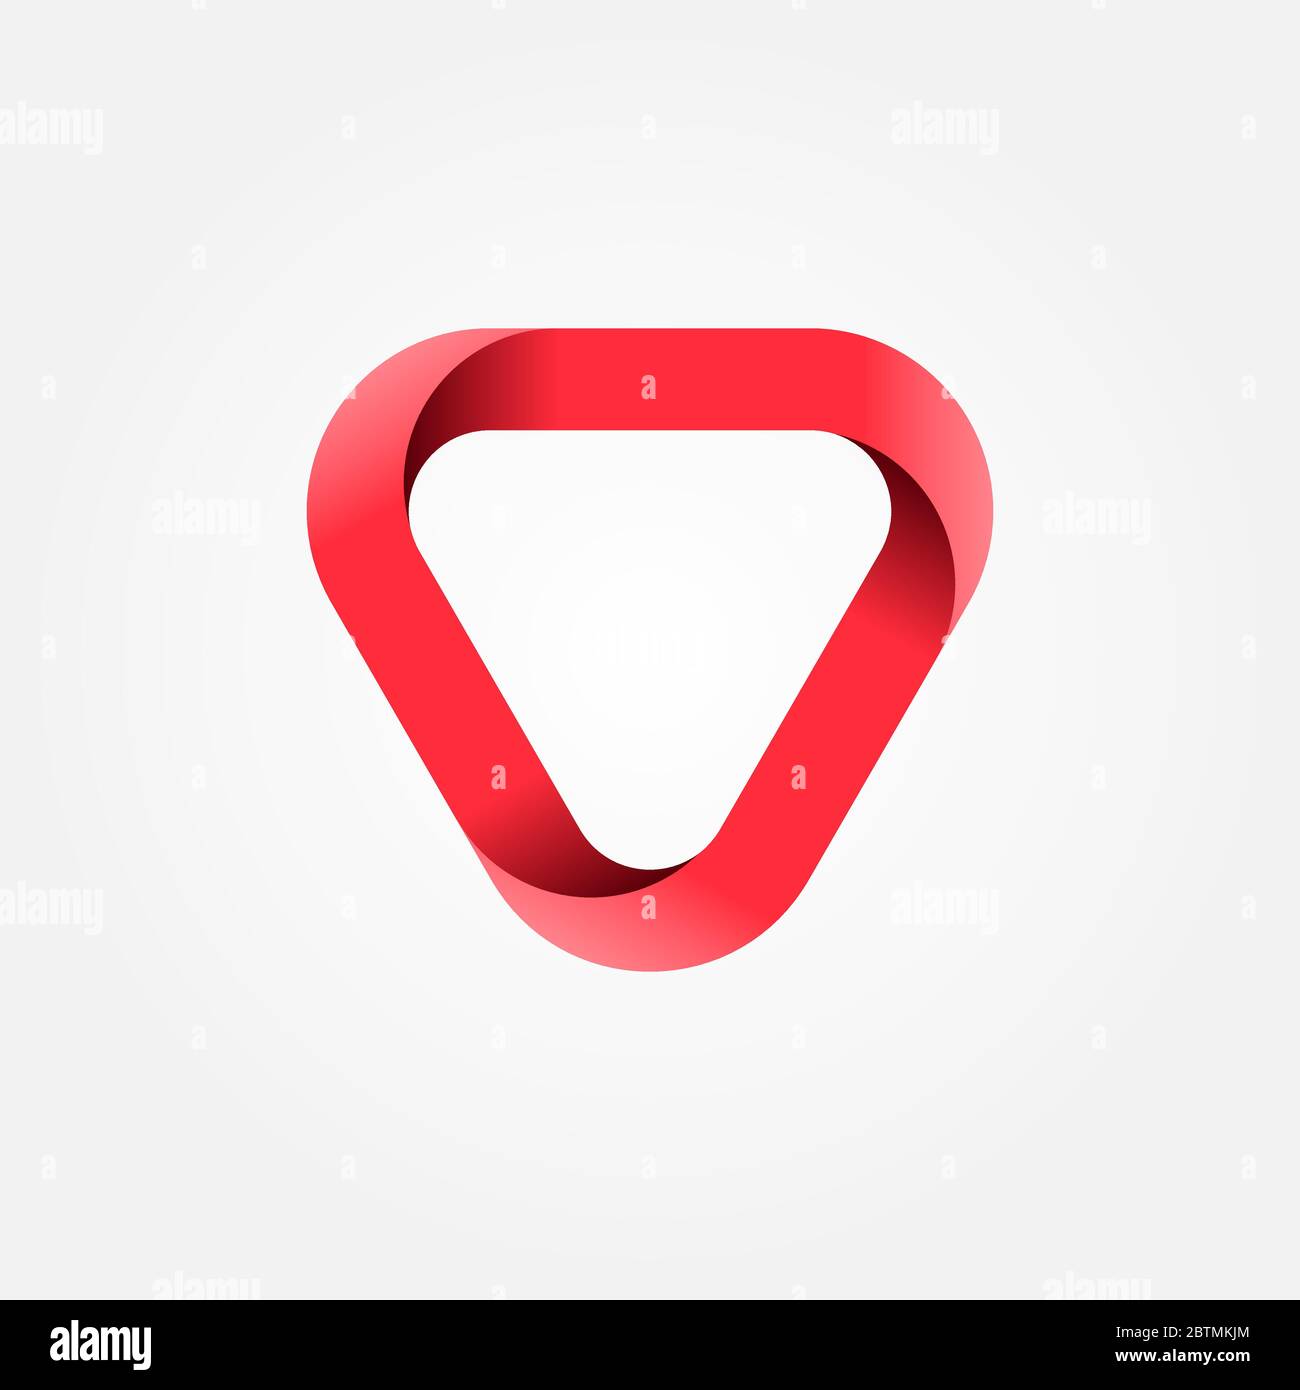 Triangle red logo. Design geometric element. Corporate, technology, media style templates vector design. Stock - Vector illustration. Stock Vector